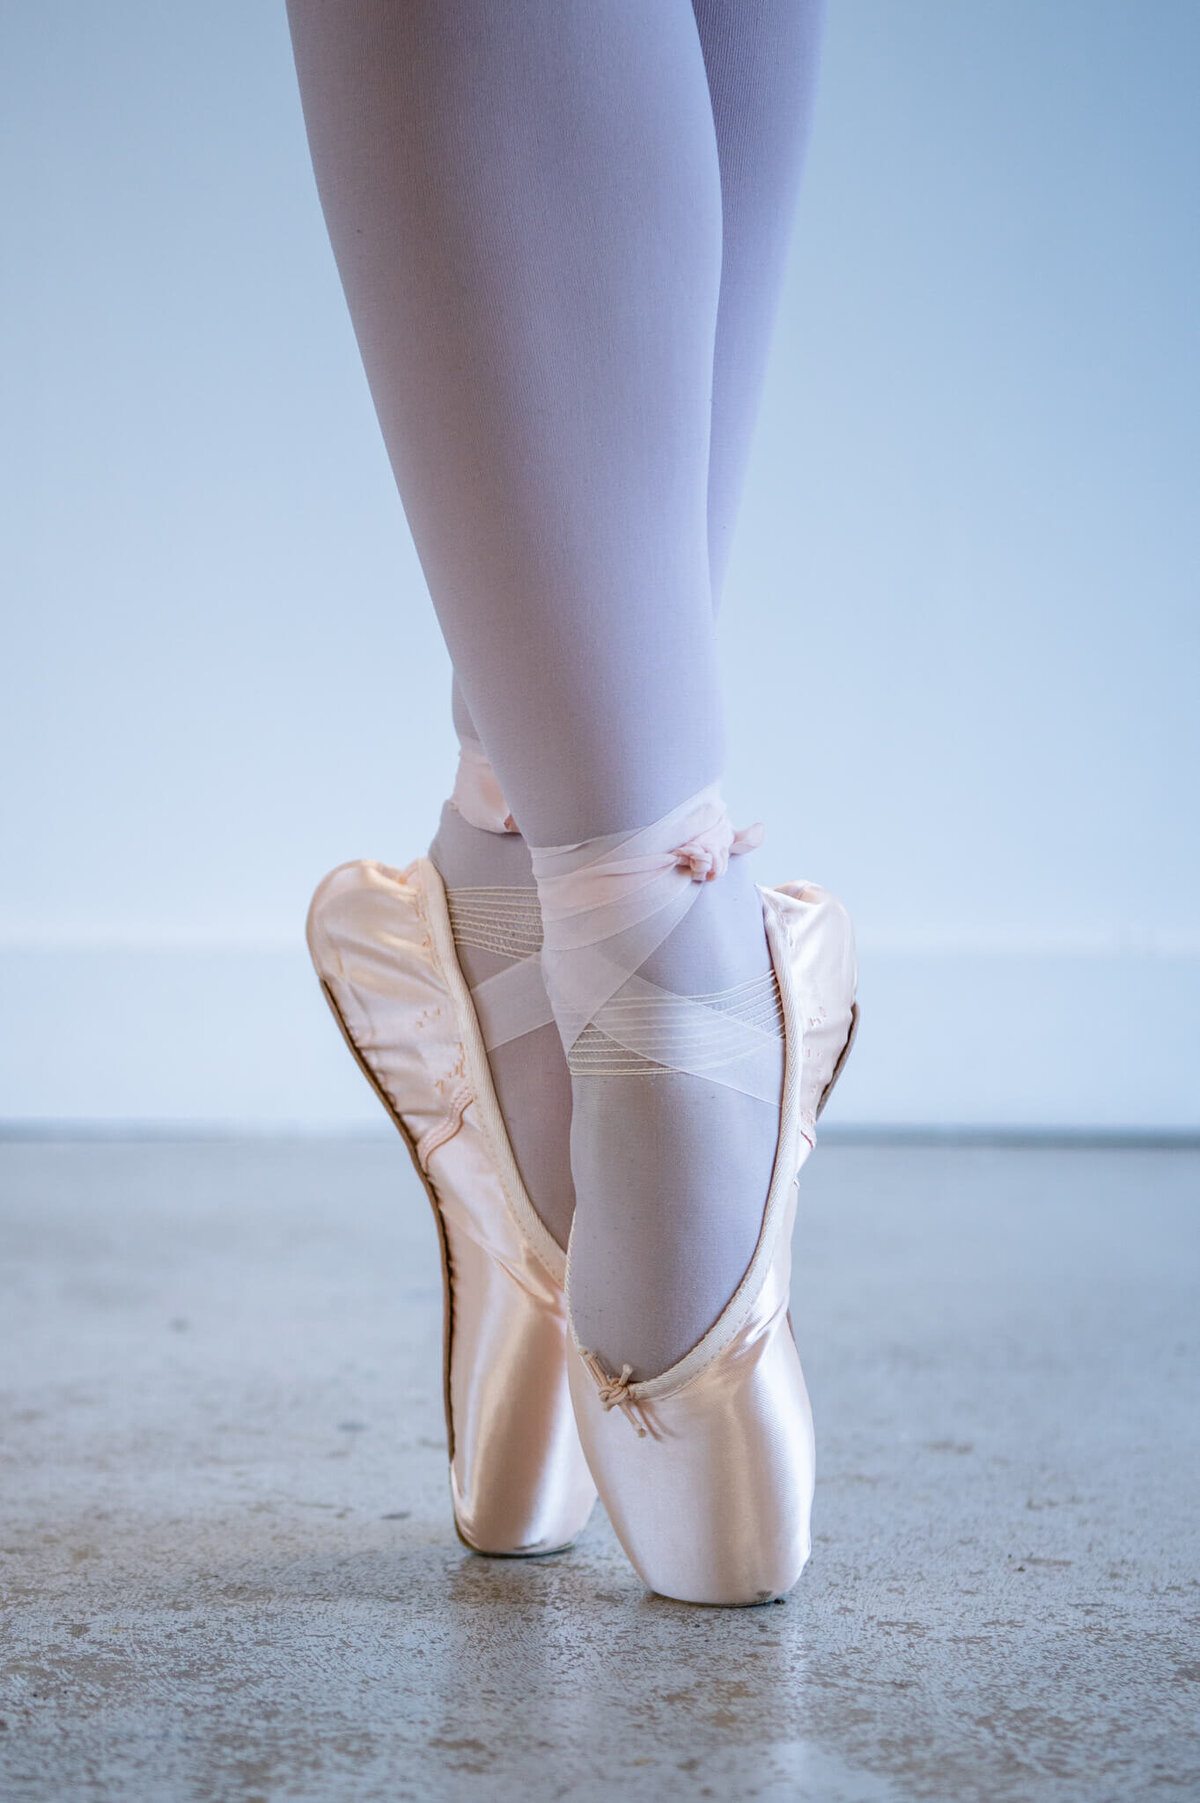 Chloe Bolam - Milton Keynes Buckinghamshire UK Branding Photographer - Ballet Dancer Brand and Headshot Photoshoot - 18.03.2022 -4